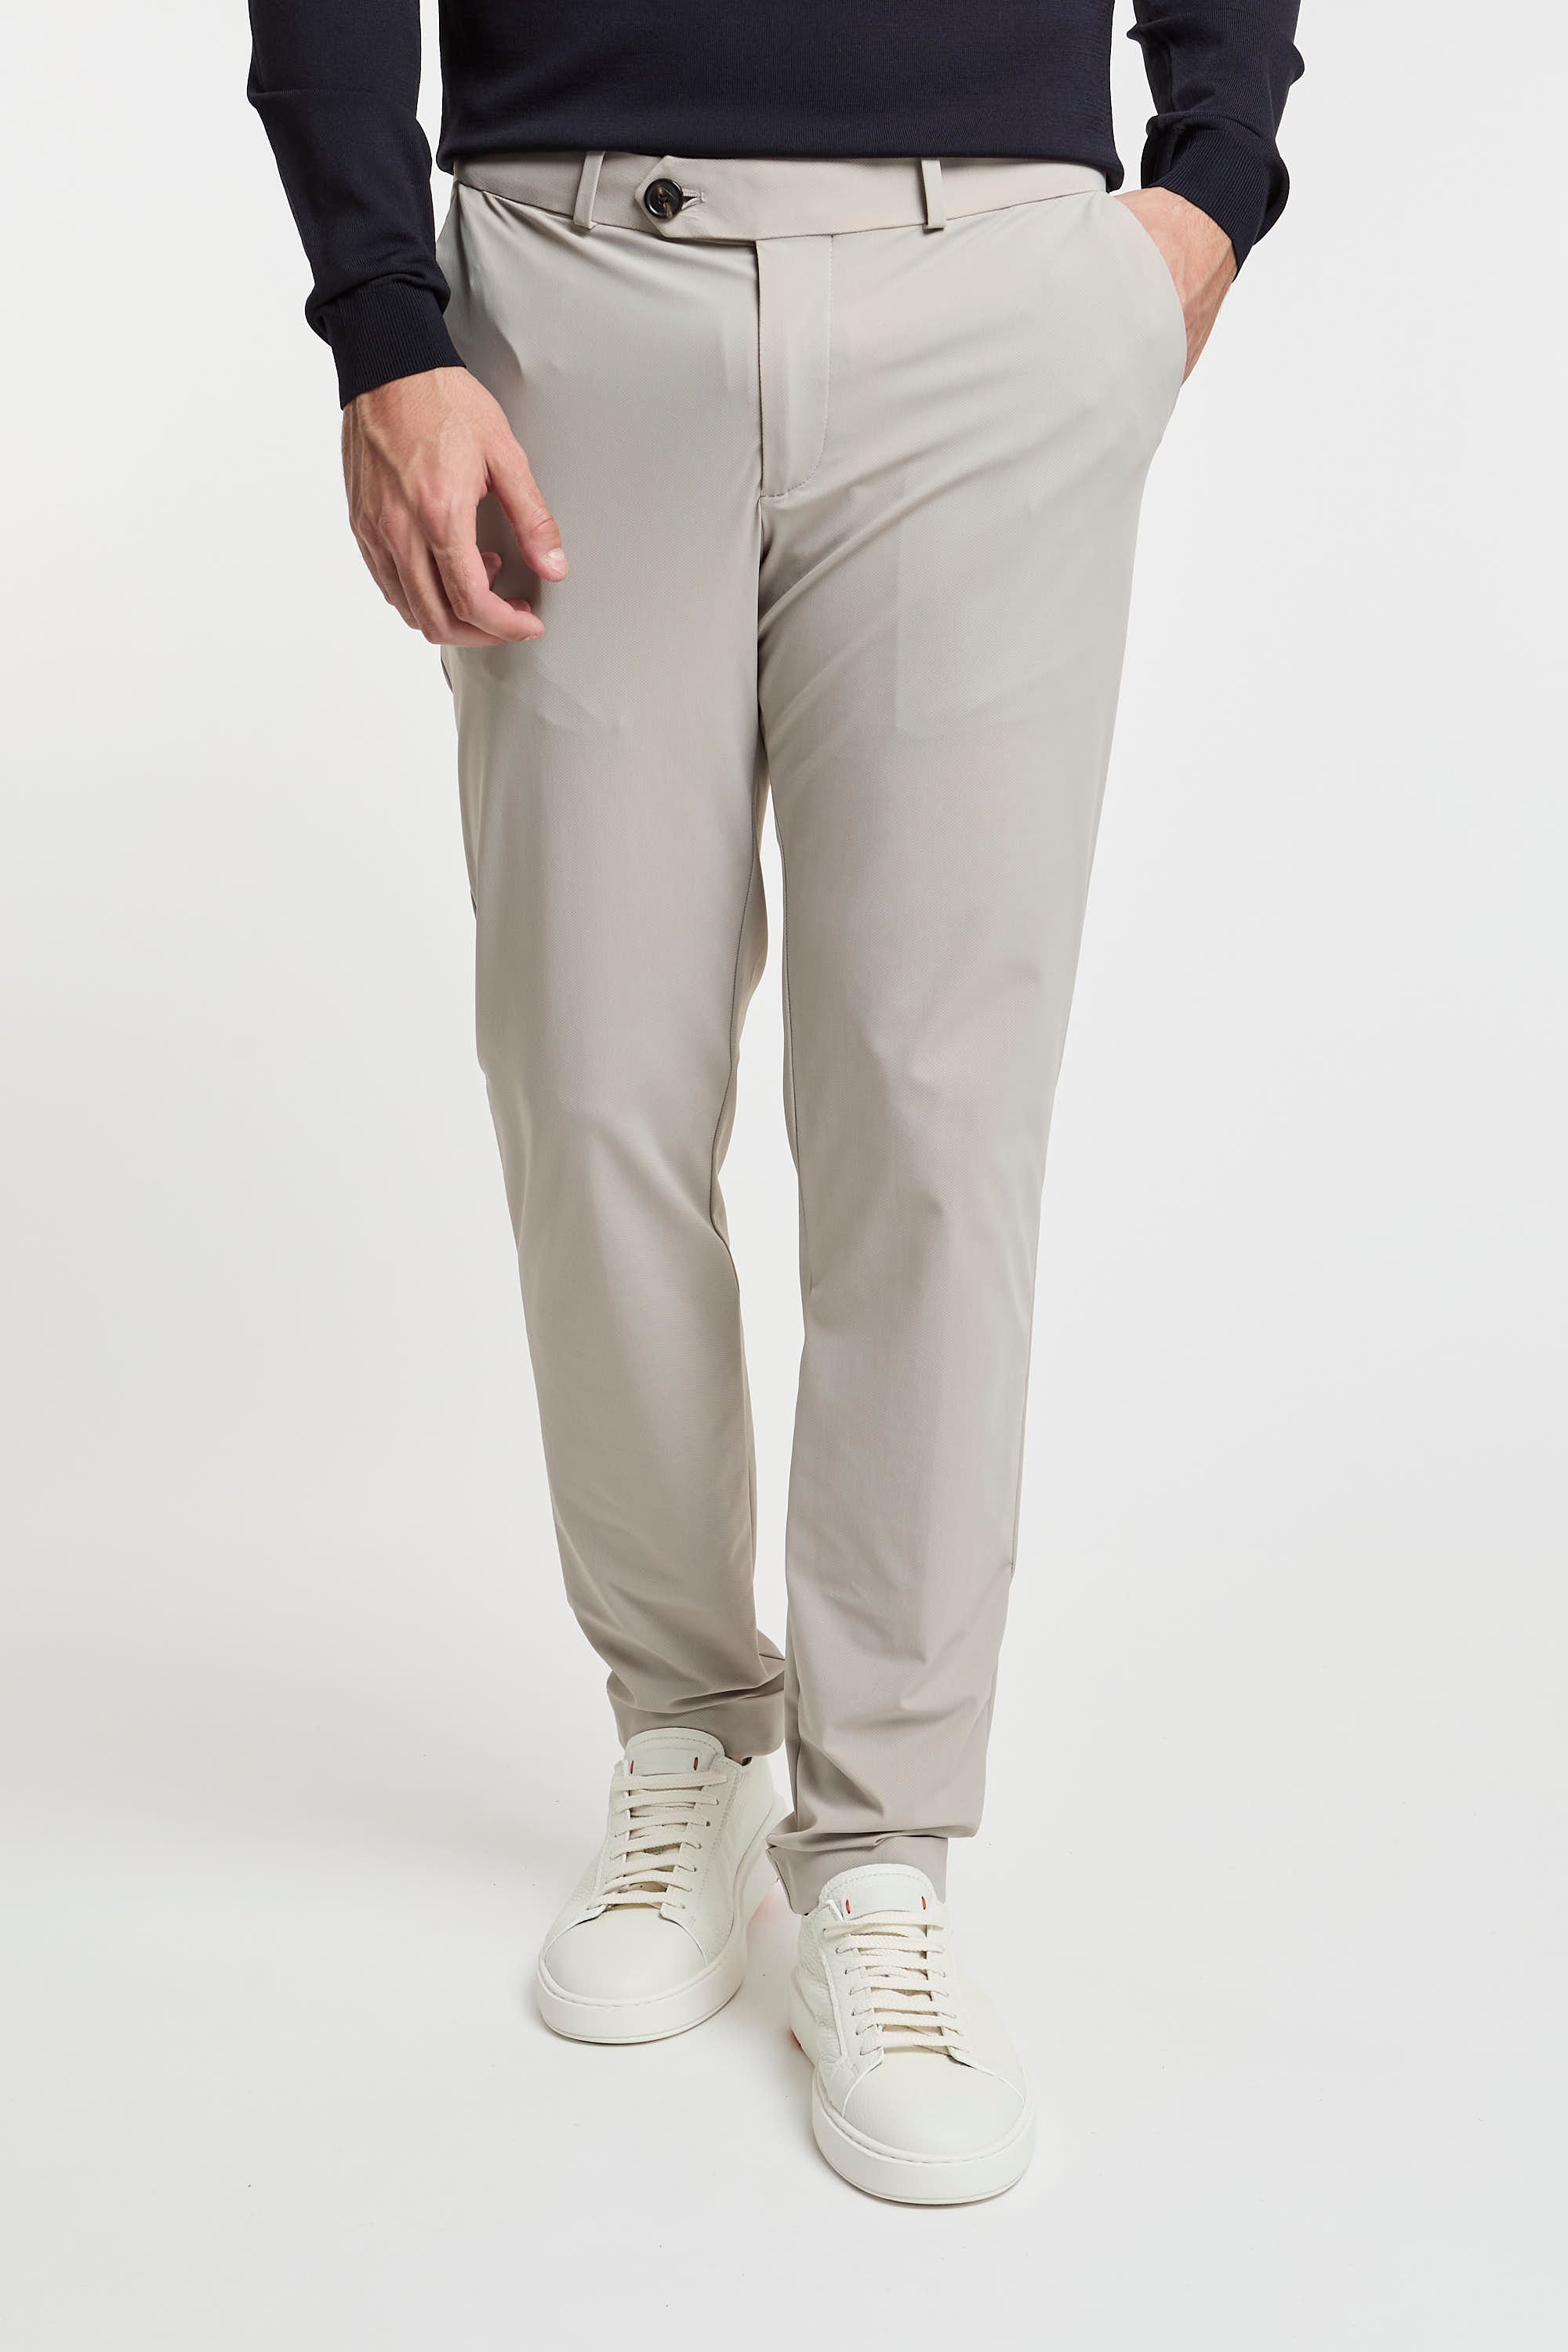 RRD Men's Micro Chino Nylon/Elastane Pants Beige-1